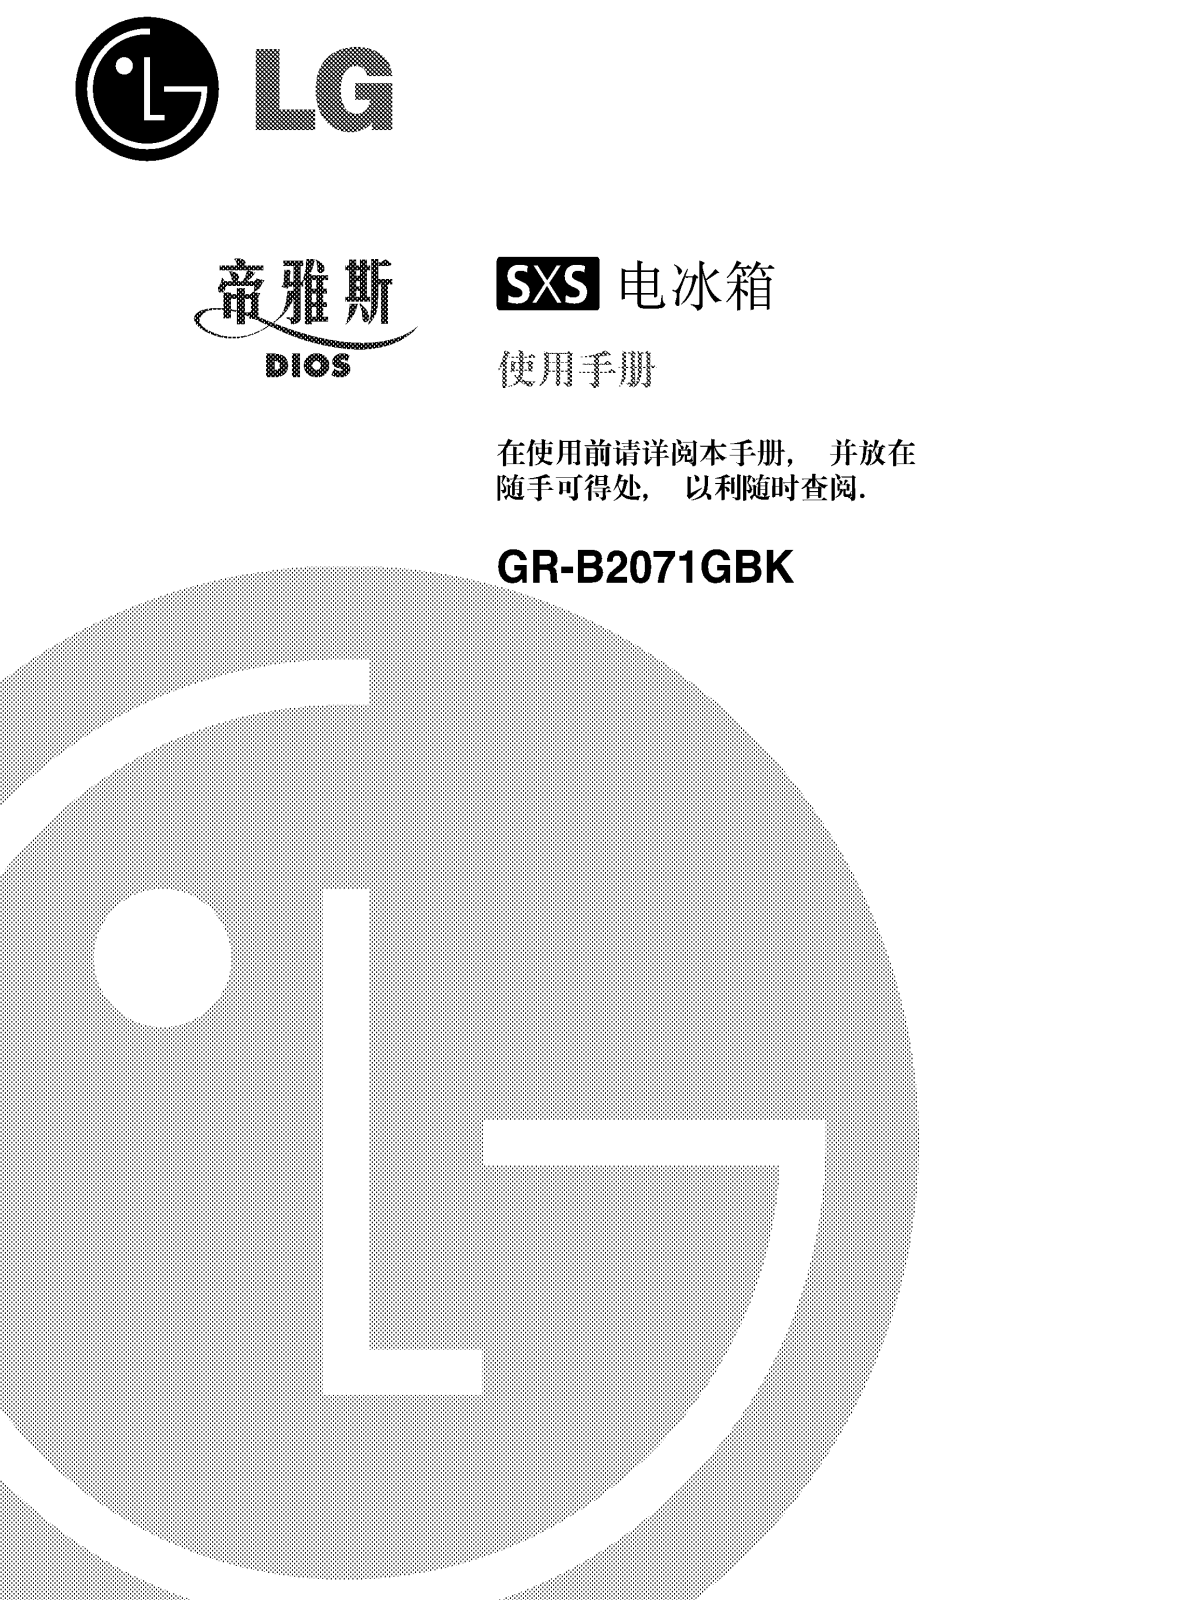 Lg GR-B2071GBK User Manual